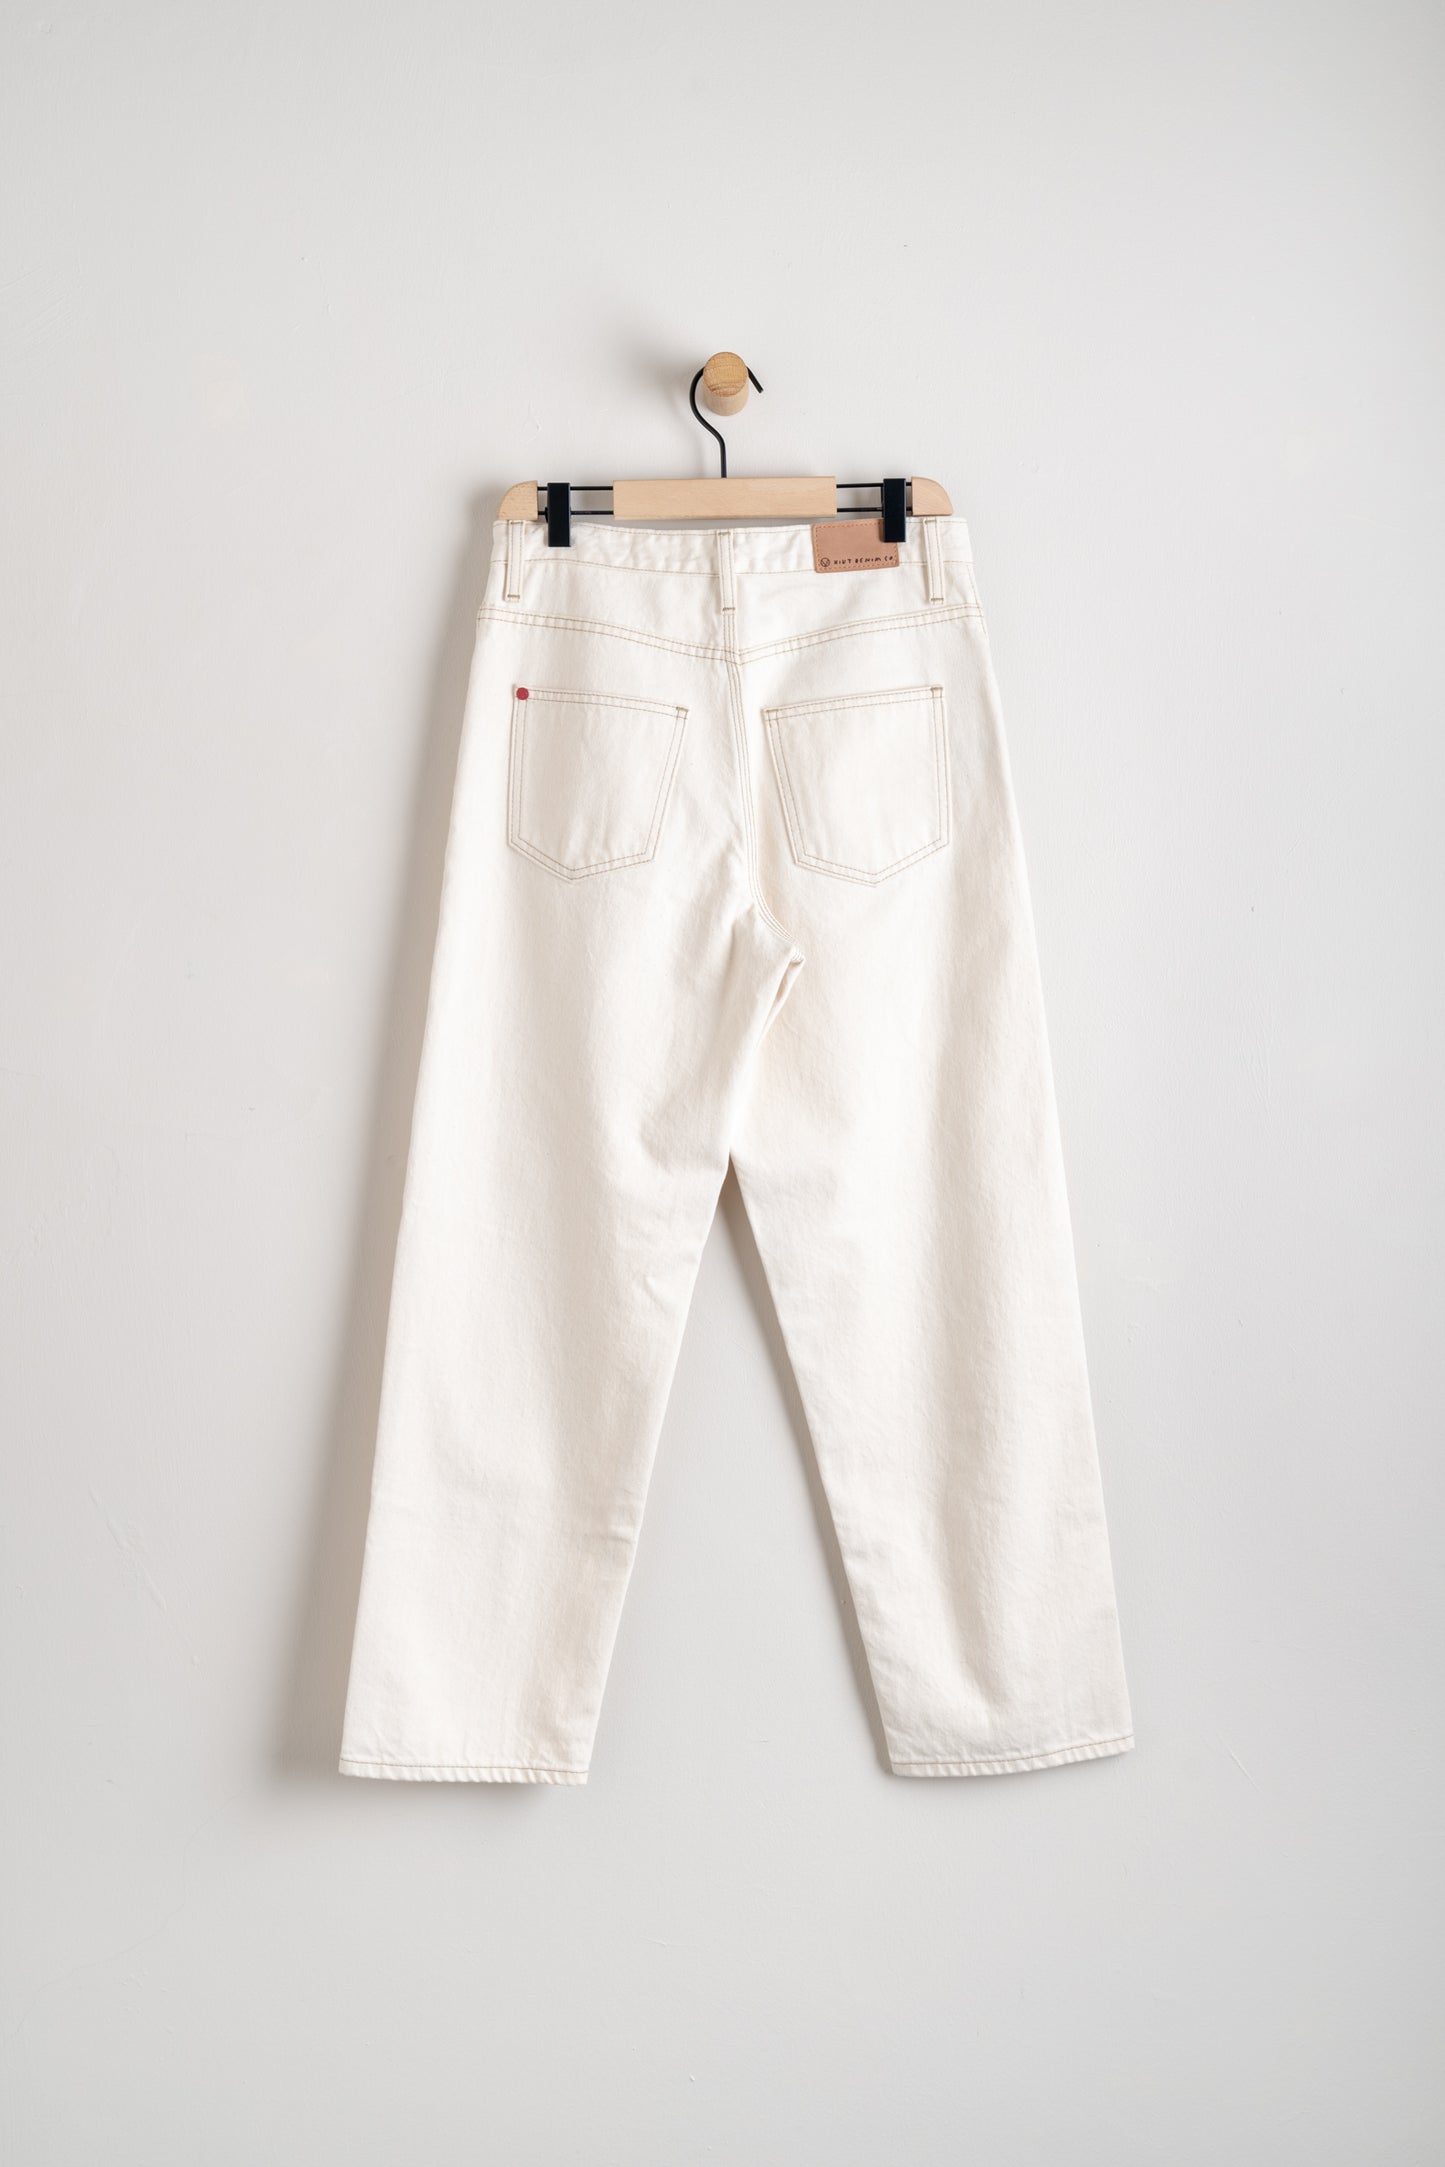 Hiut Denim Co. Organic GOTS Certified Cotton Eira Straight Leg Jeans